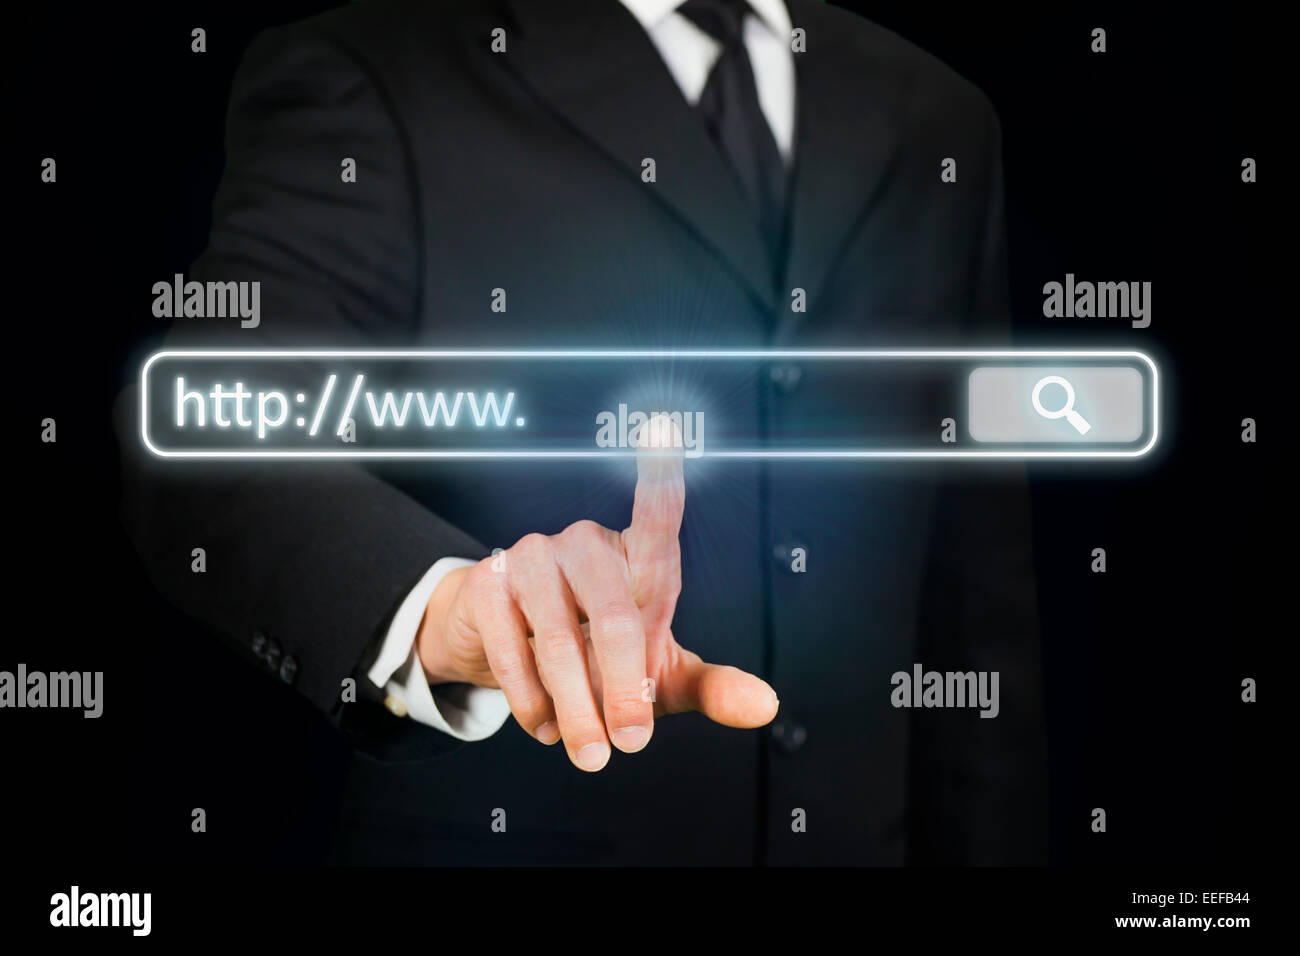 Businessman clicking Internet address bar Stock Photo